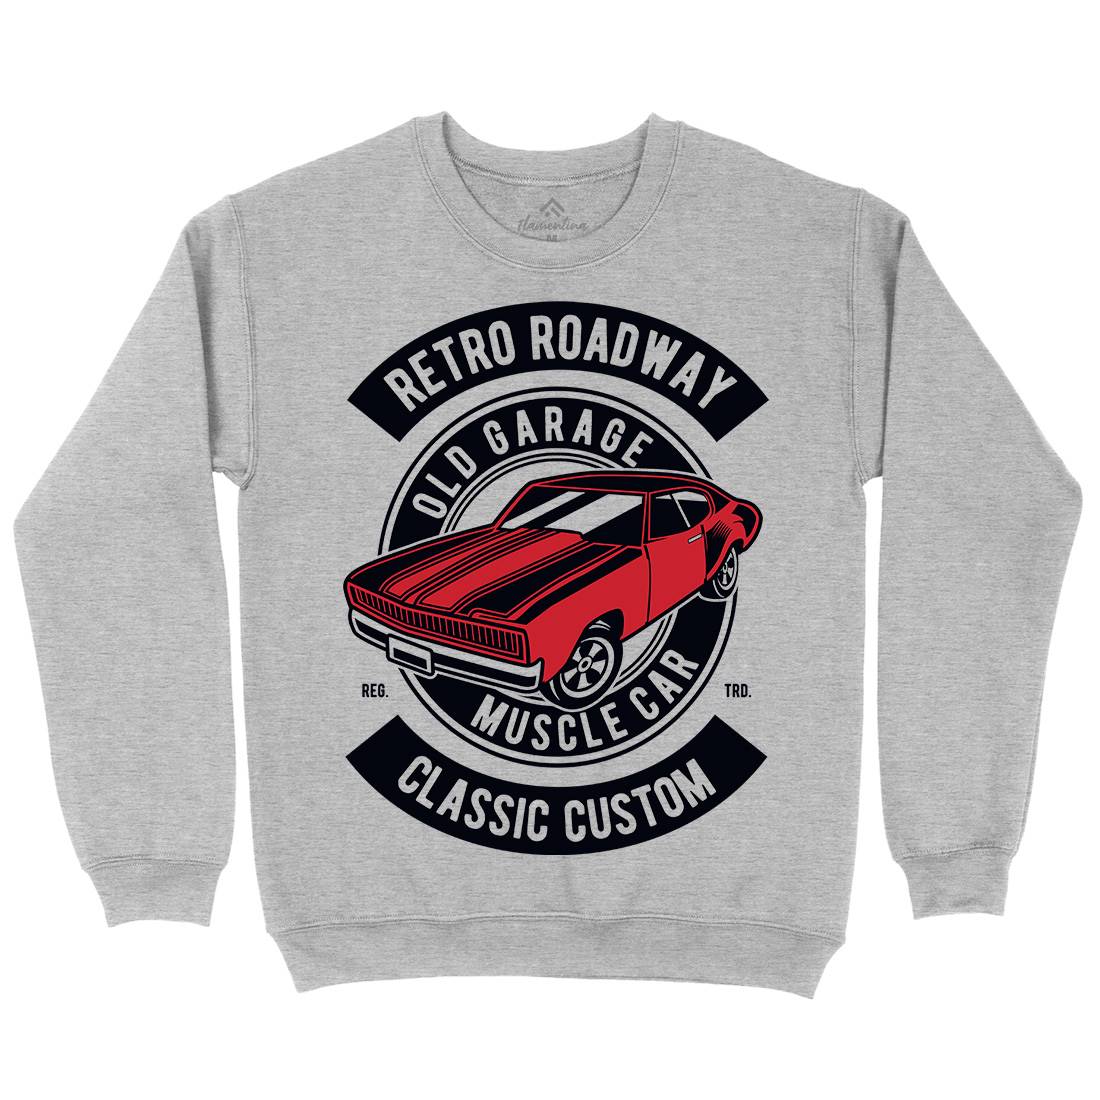 Retro Roadway Mens Crew Neck Sweatshirt Cars D568